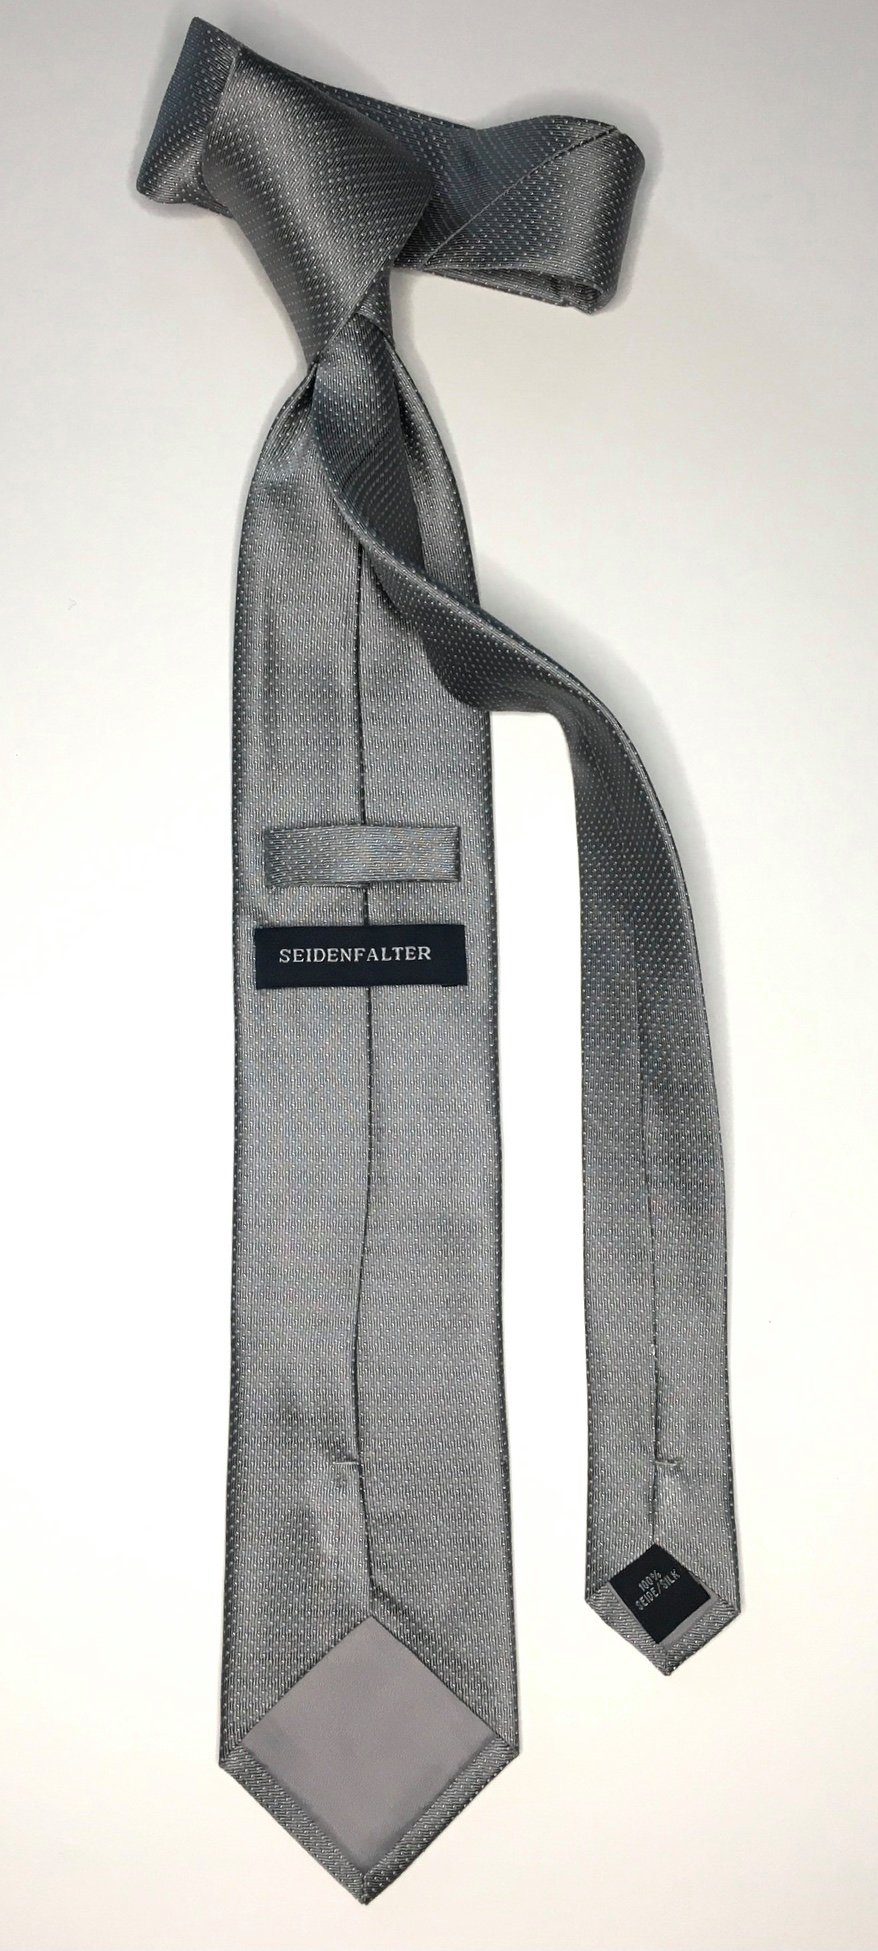 Picoté edlen Seidenfalter Krawatte Design Krawatte Picoté Krawatte Seidenfalter Grau Seidenfalter im 6cm